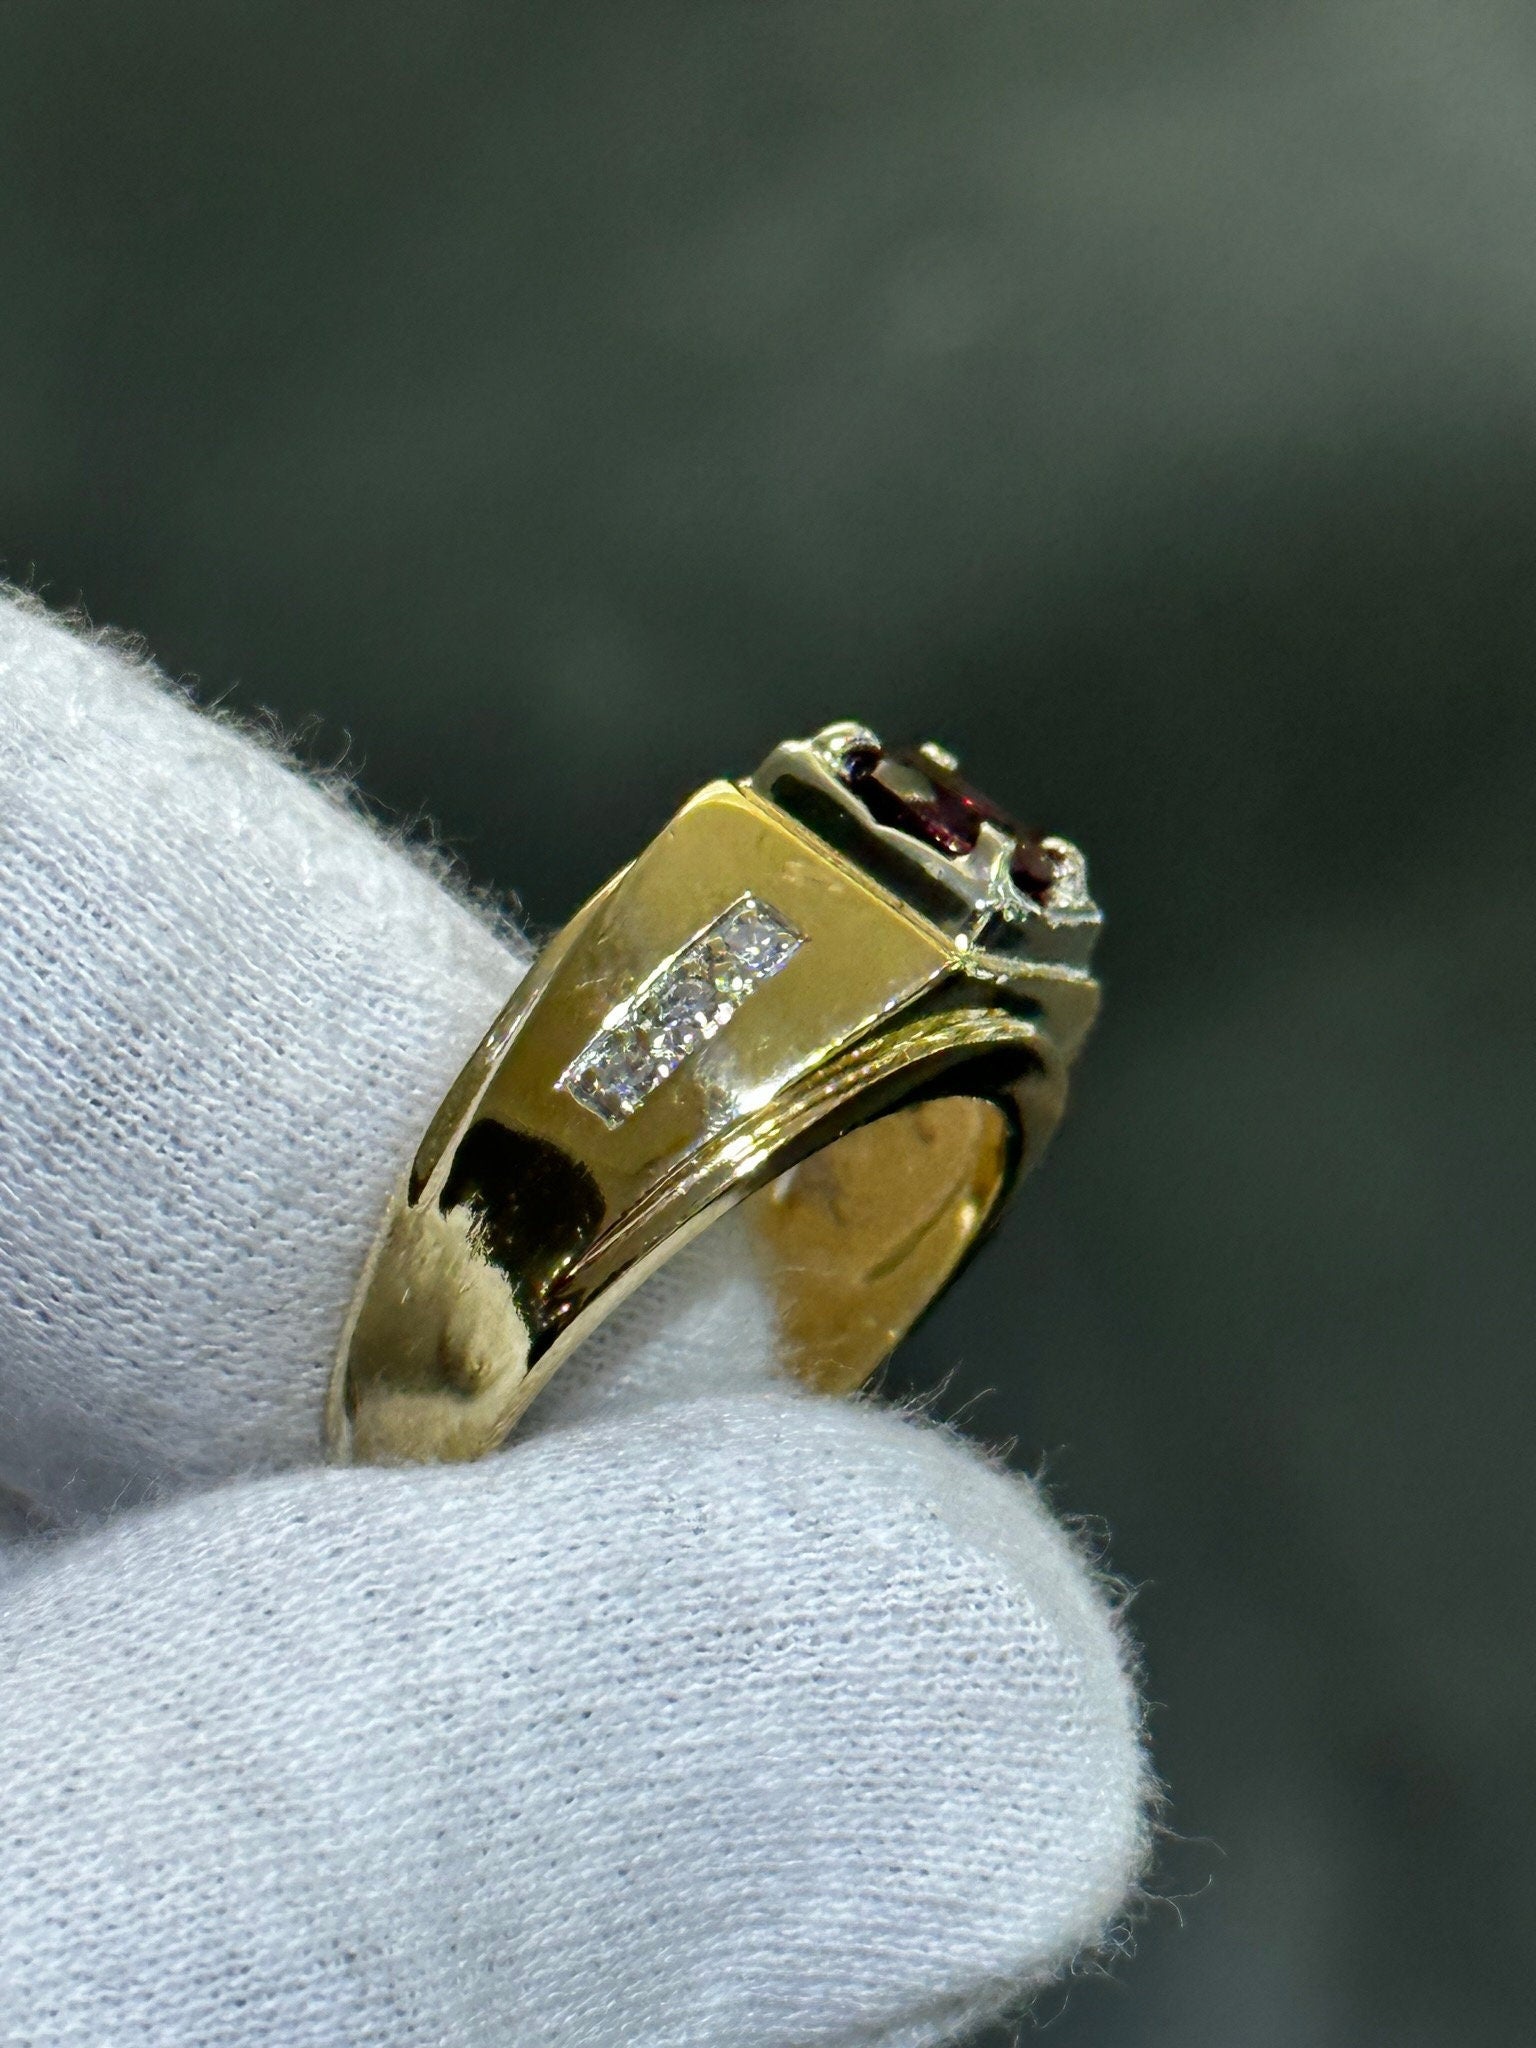 LIV 14k Yellow Gold & Natural Diamond Vintage Halo Round Red Ruby Design Men's Ring